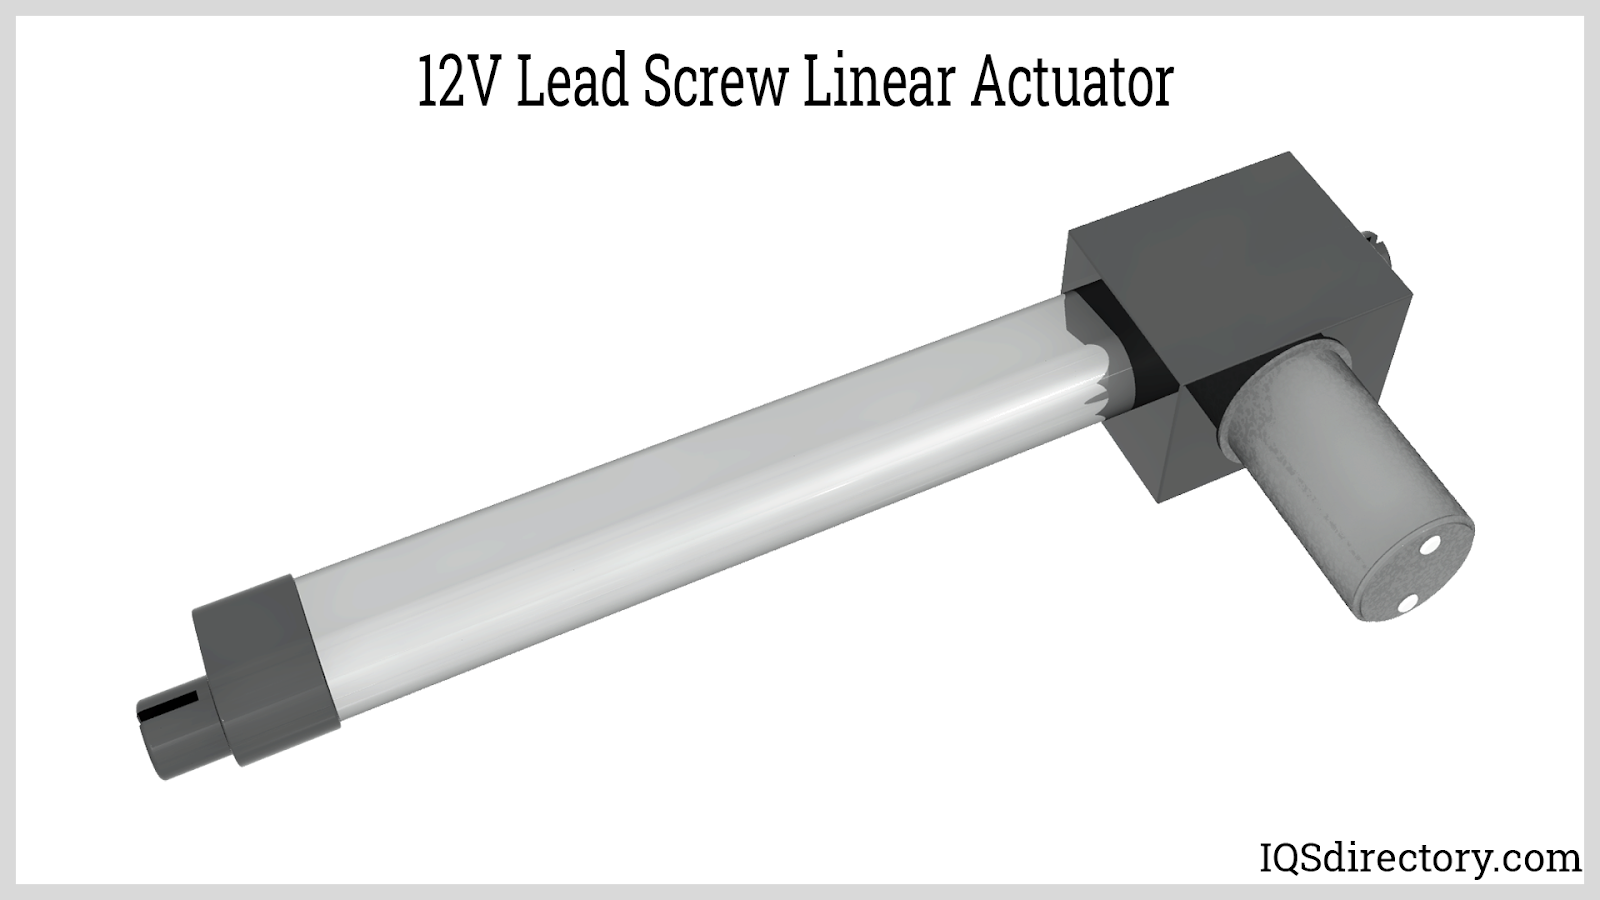 12V Lead Screw Linear Actuator